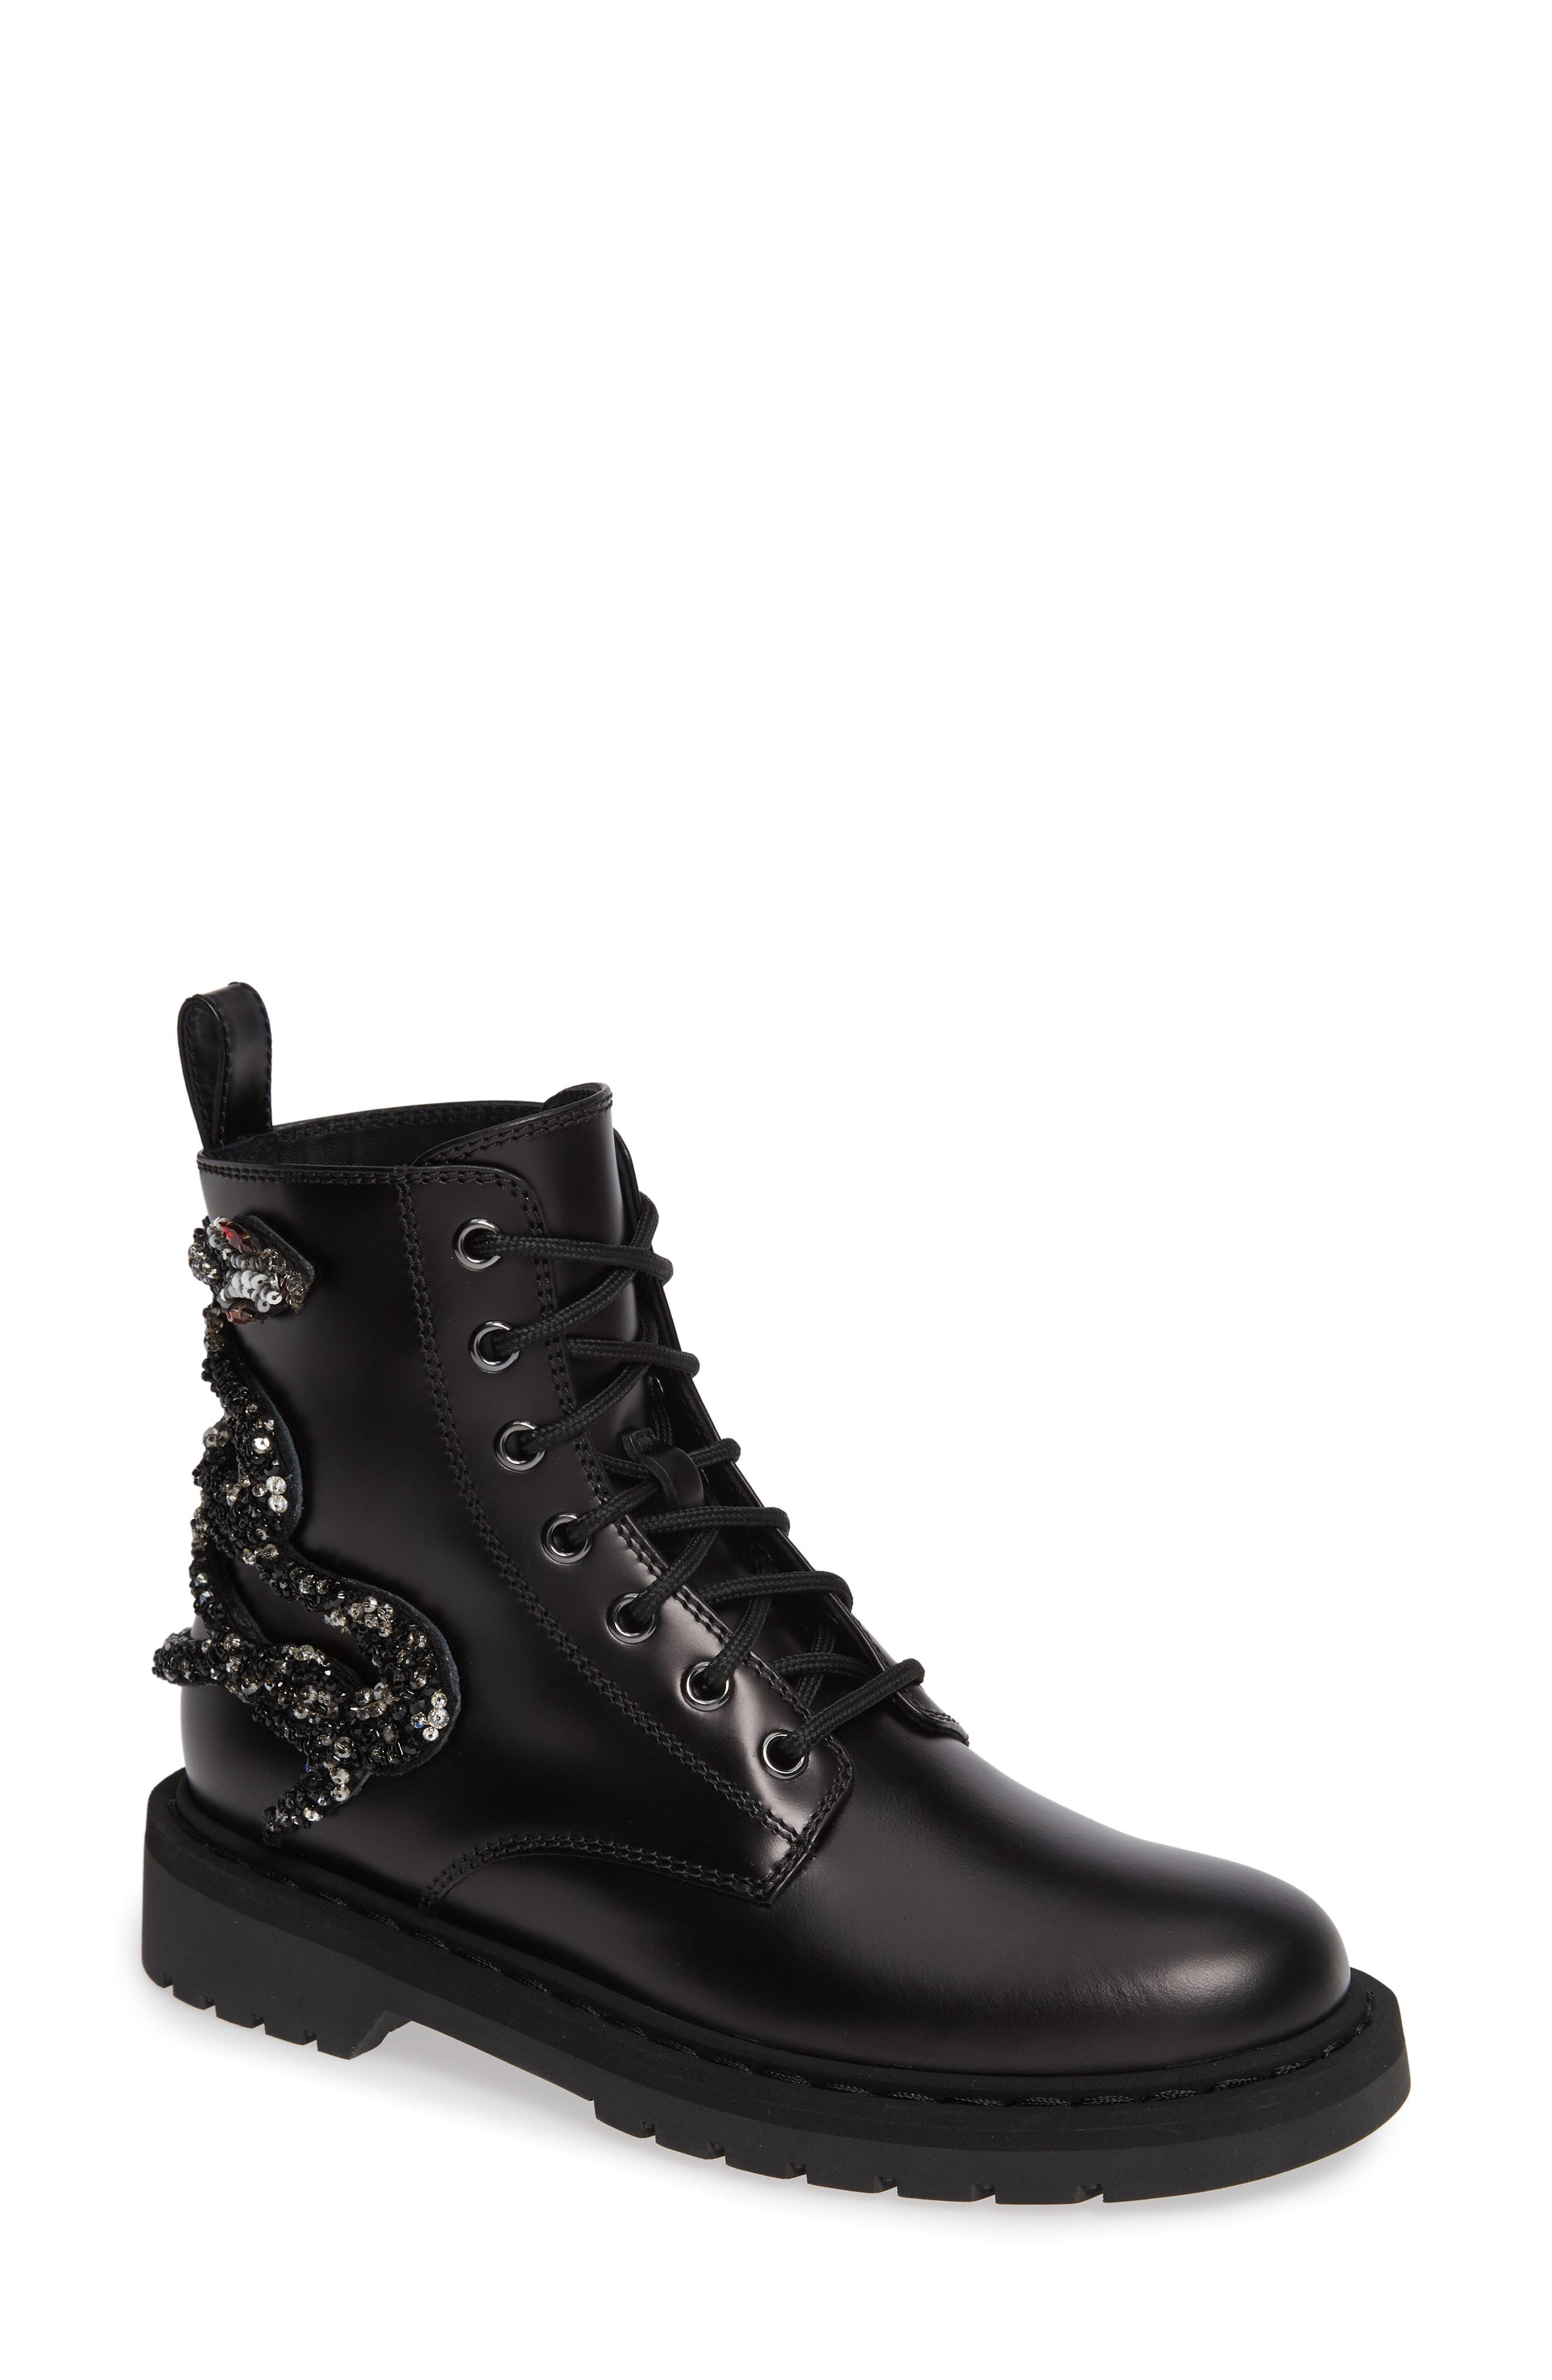 valentino snake boots